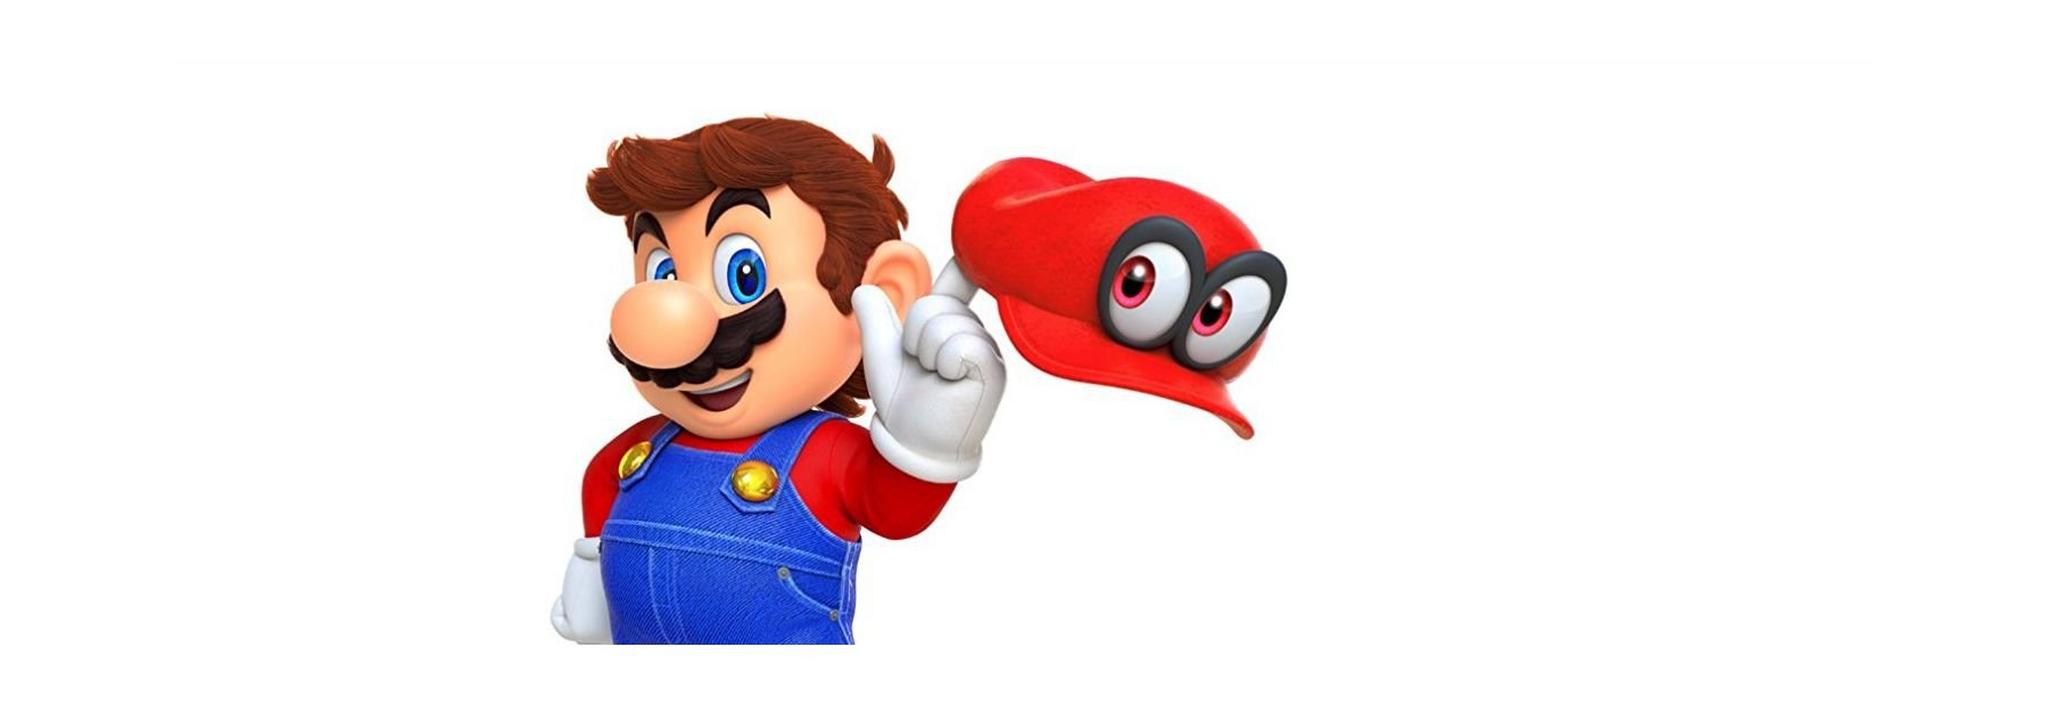 Super Mario Odyssey Nintendo Switch Game (SUPERMARIOODD)